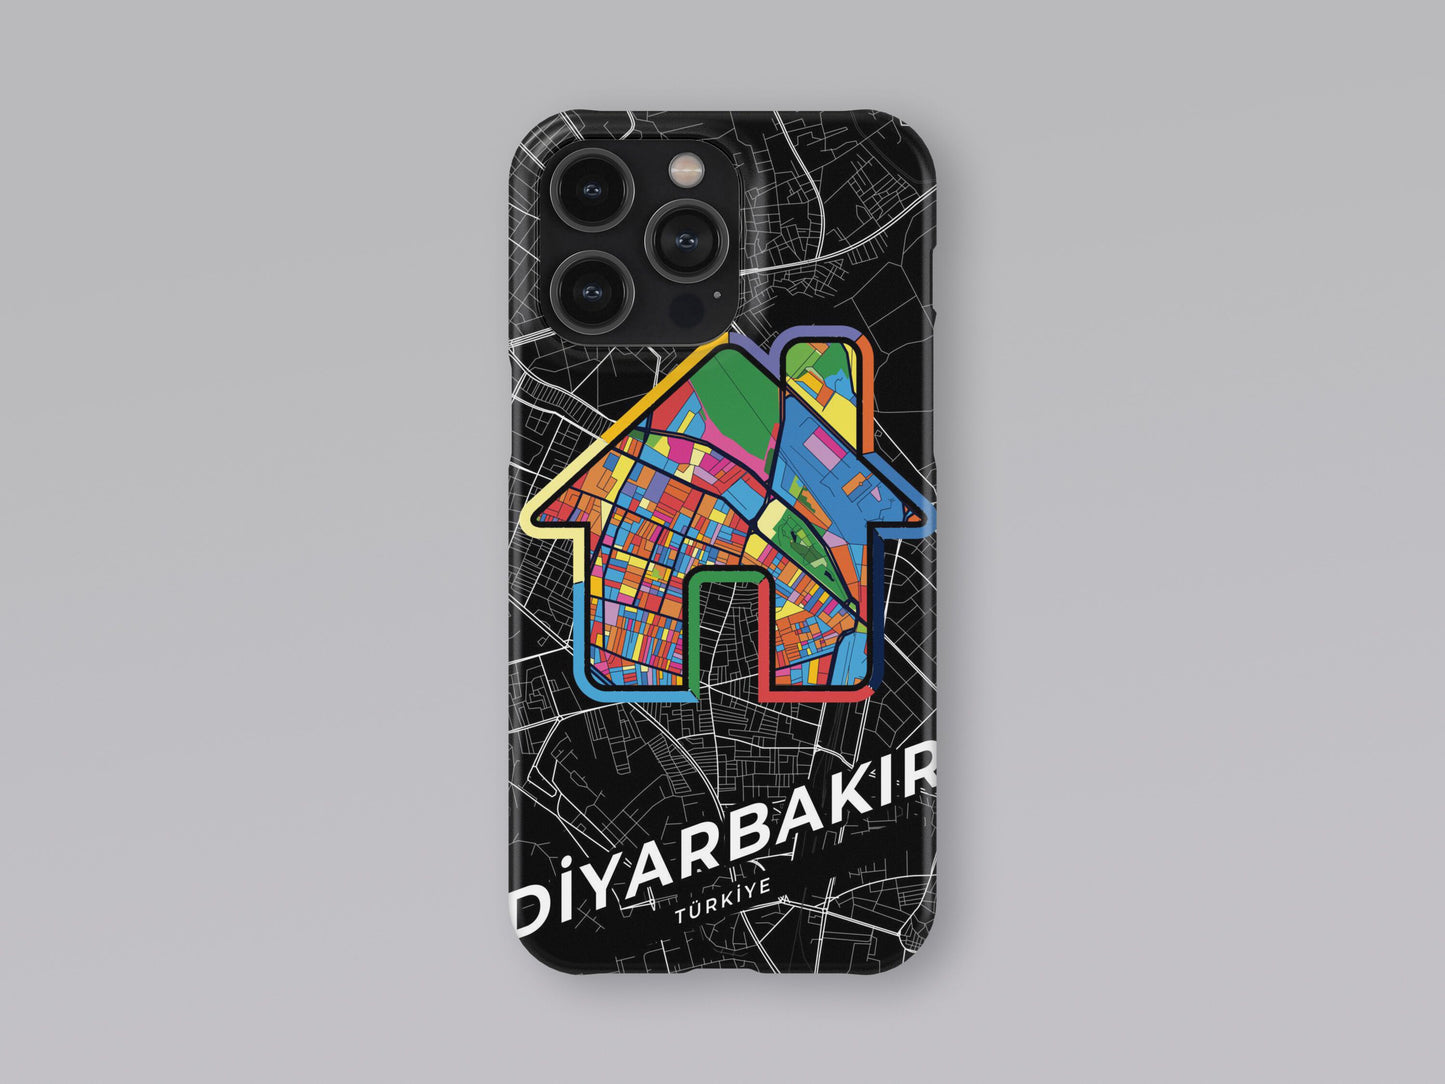 Diyarbakır Turkey slim phone case with colorful icon. Birthday, wedding or housewarming gift. Couple match cases. 3